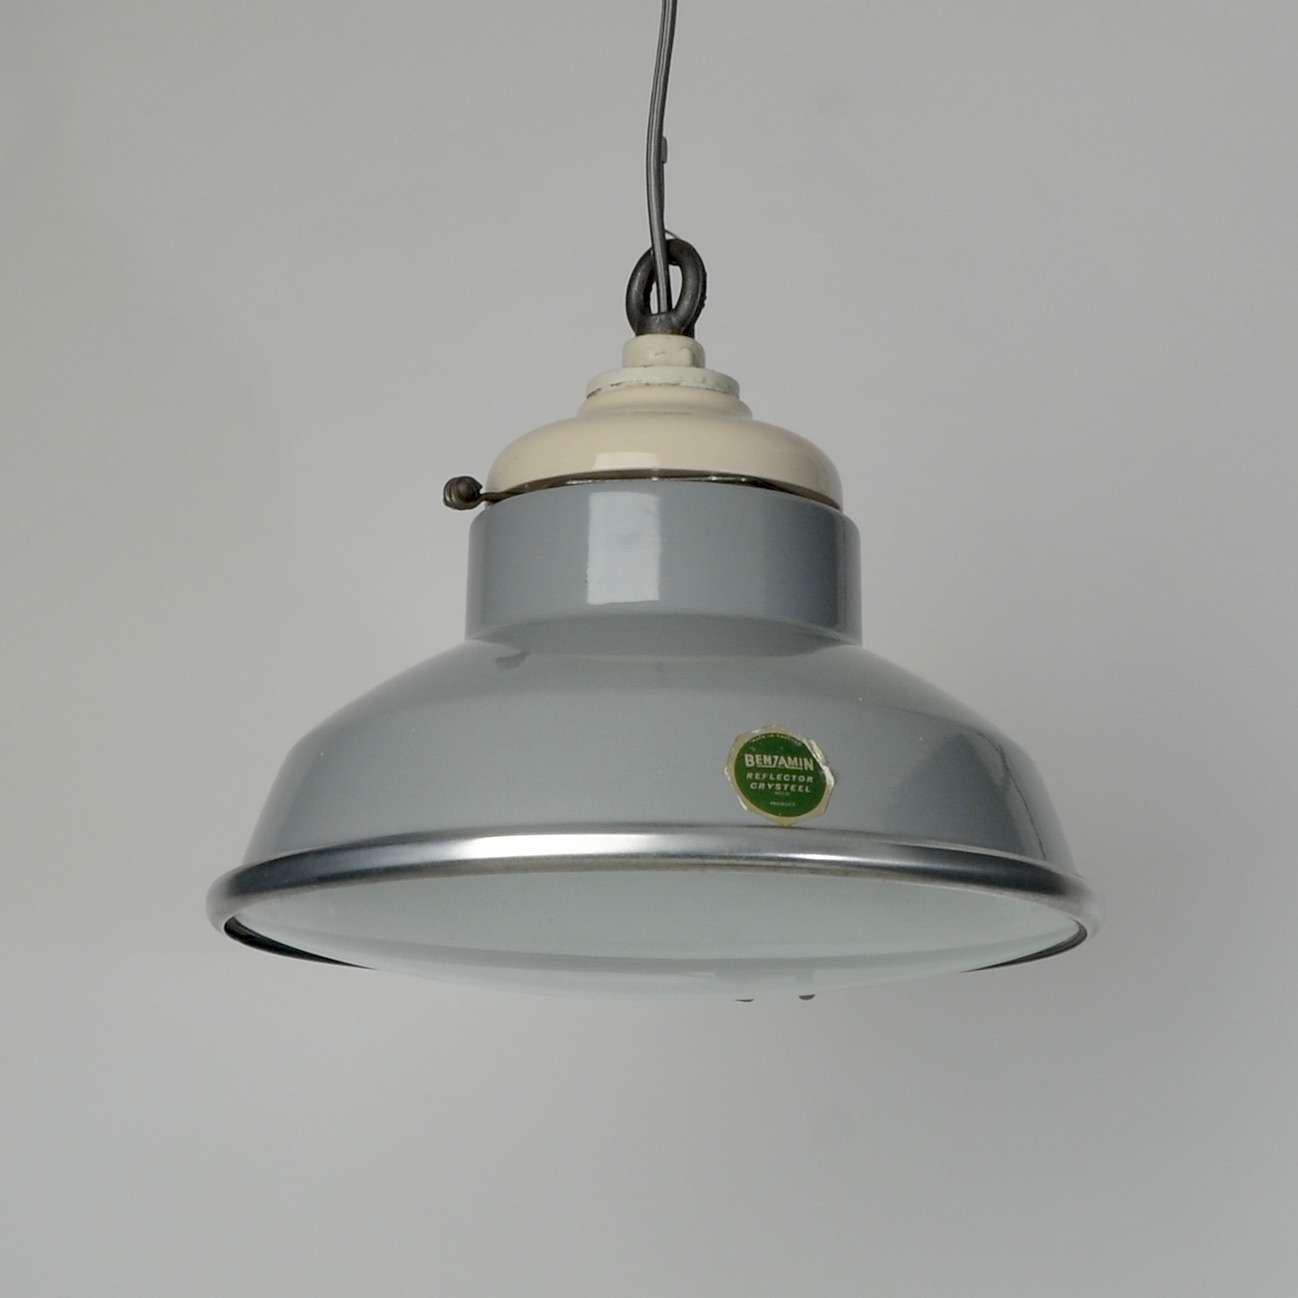 trainspotters-lighting-vintage-benjamin-reflector-crysteel-pendant